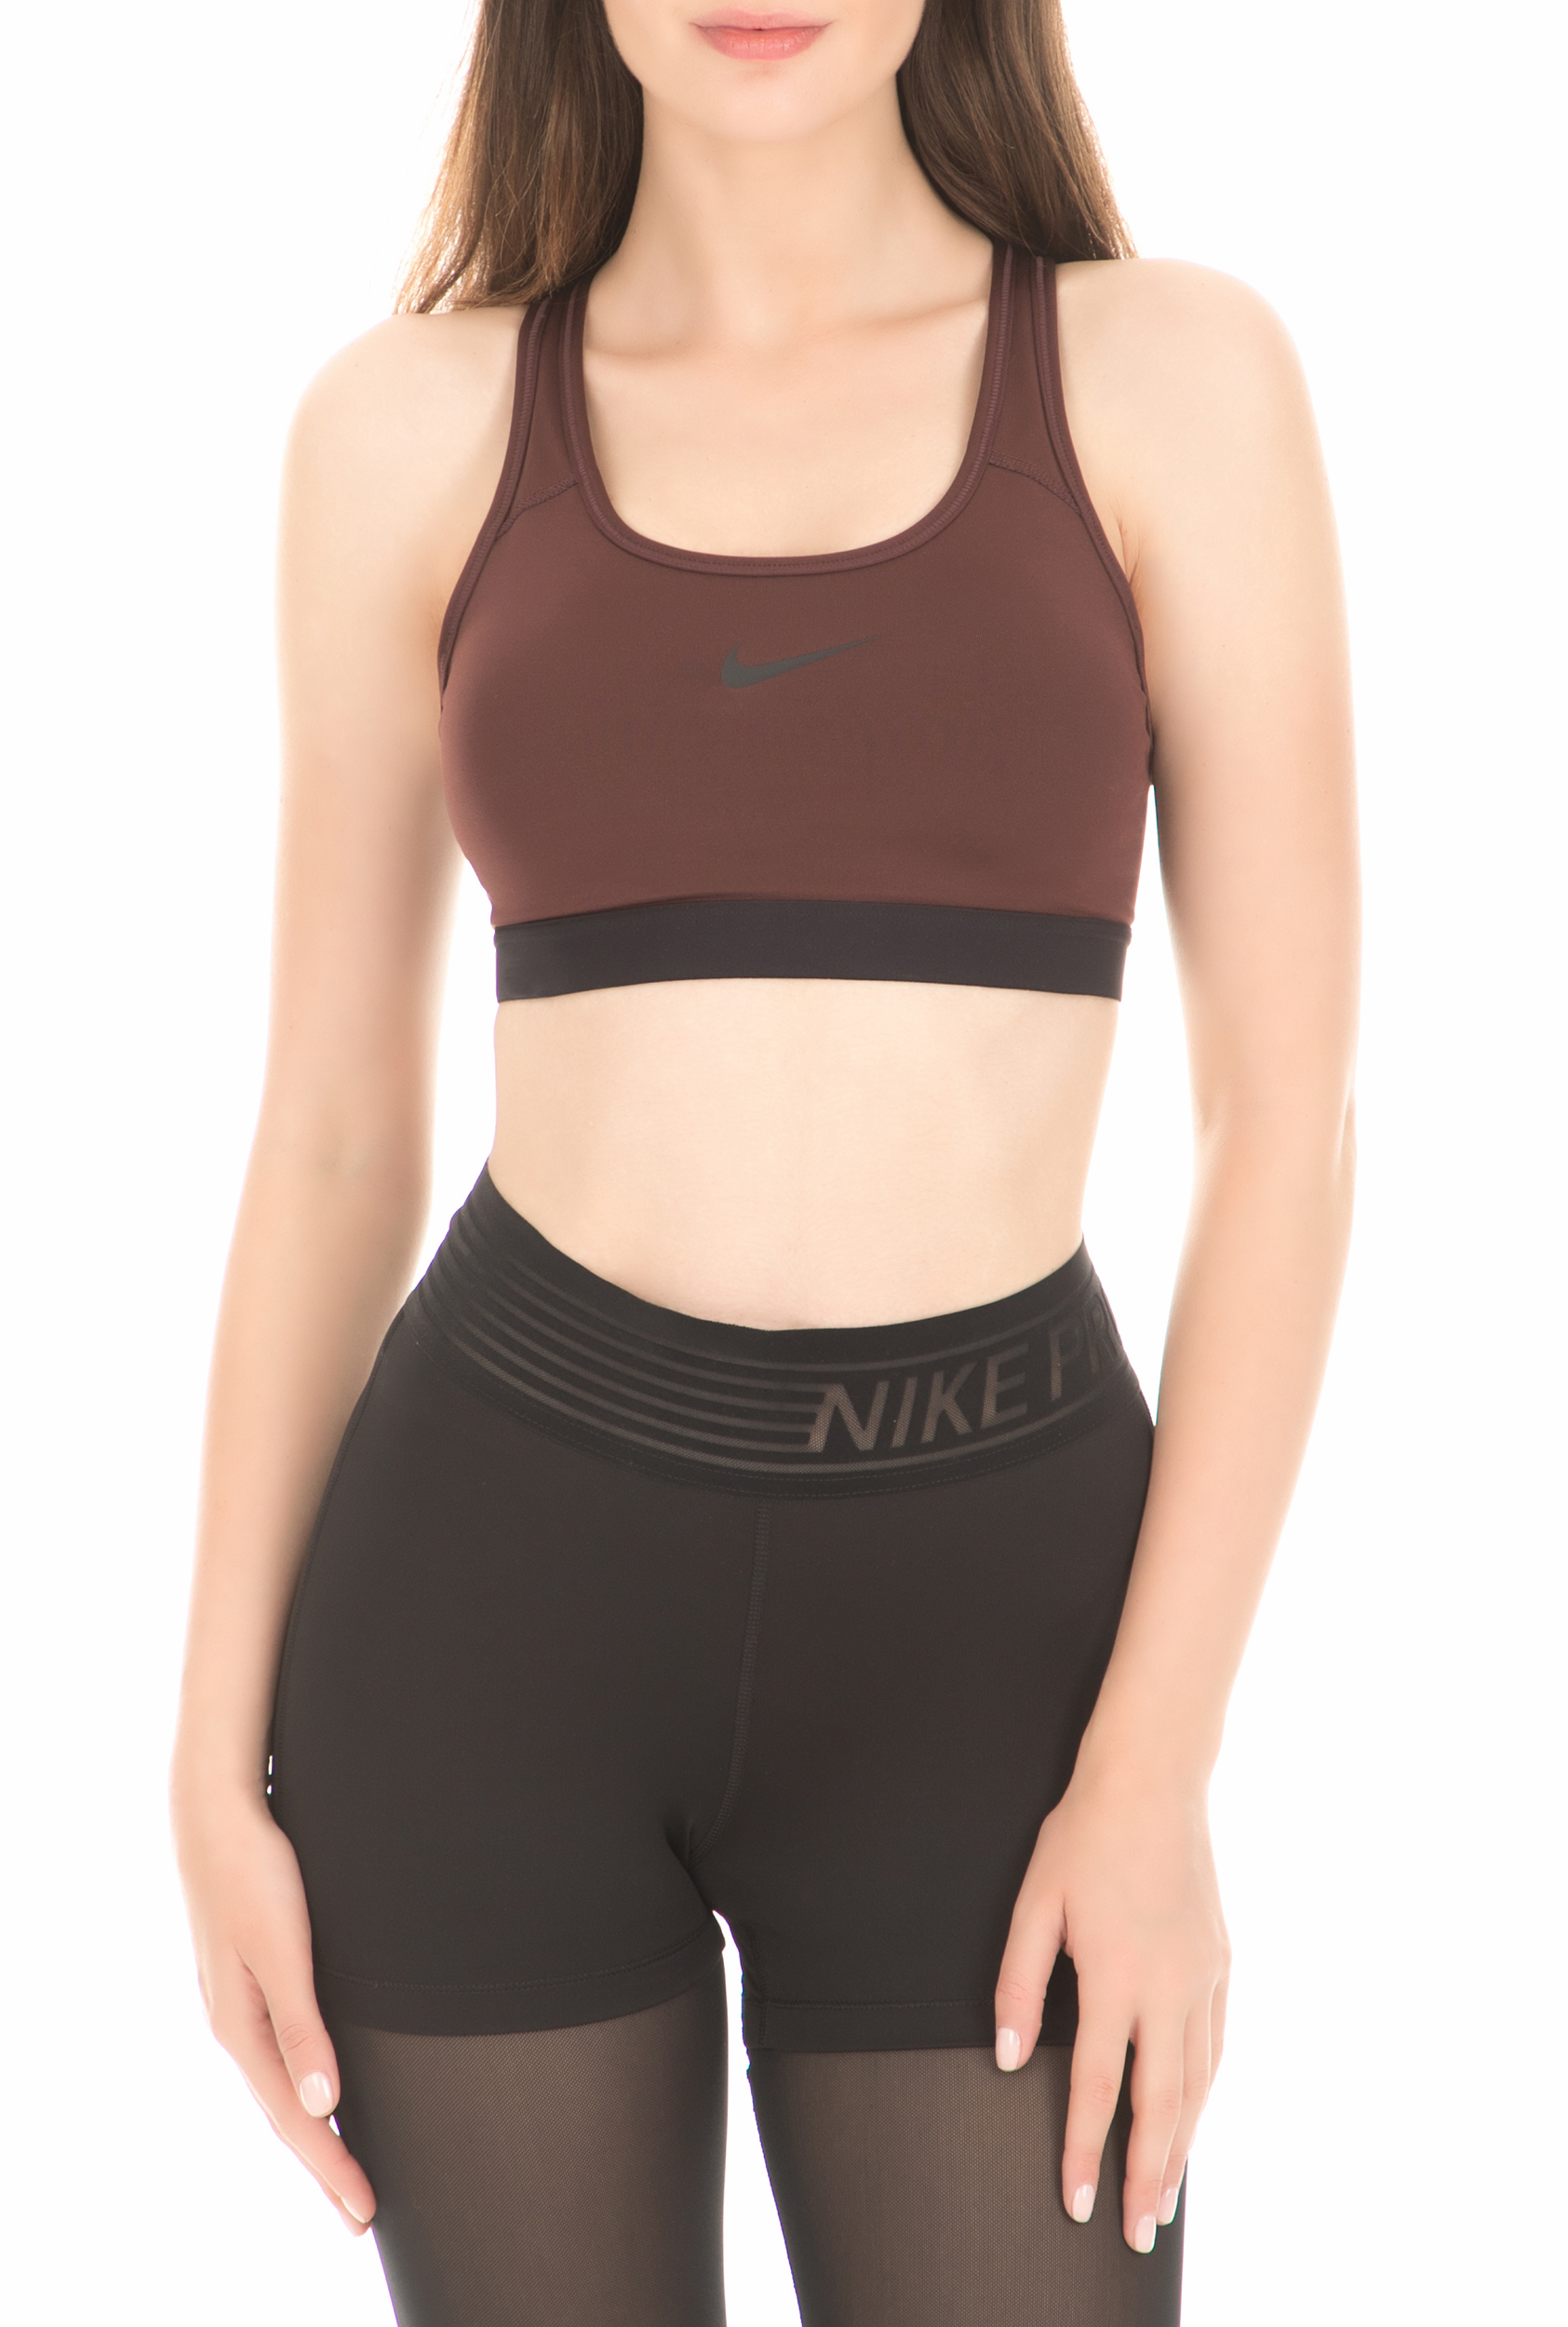 NIKE - Γυναικείος αθλητικός στηθόδεσμος Nike Classic Padded καφέ Γυναικεία/Ρούχα/Αθλητικά/Μπουστάκια